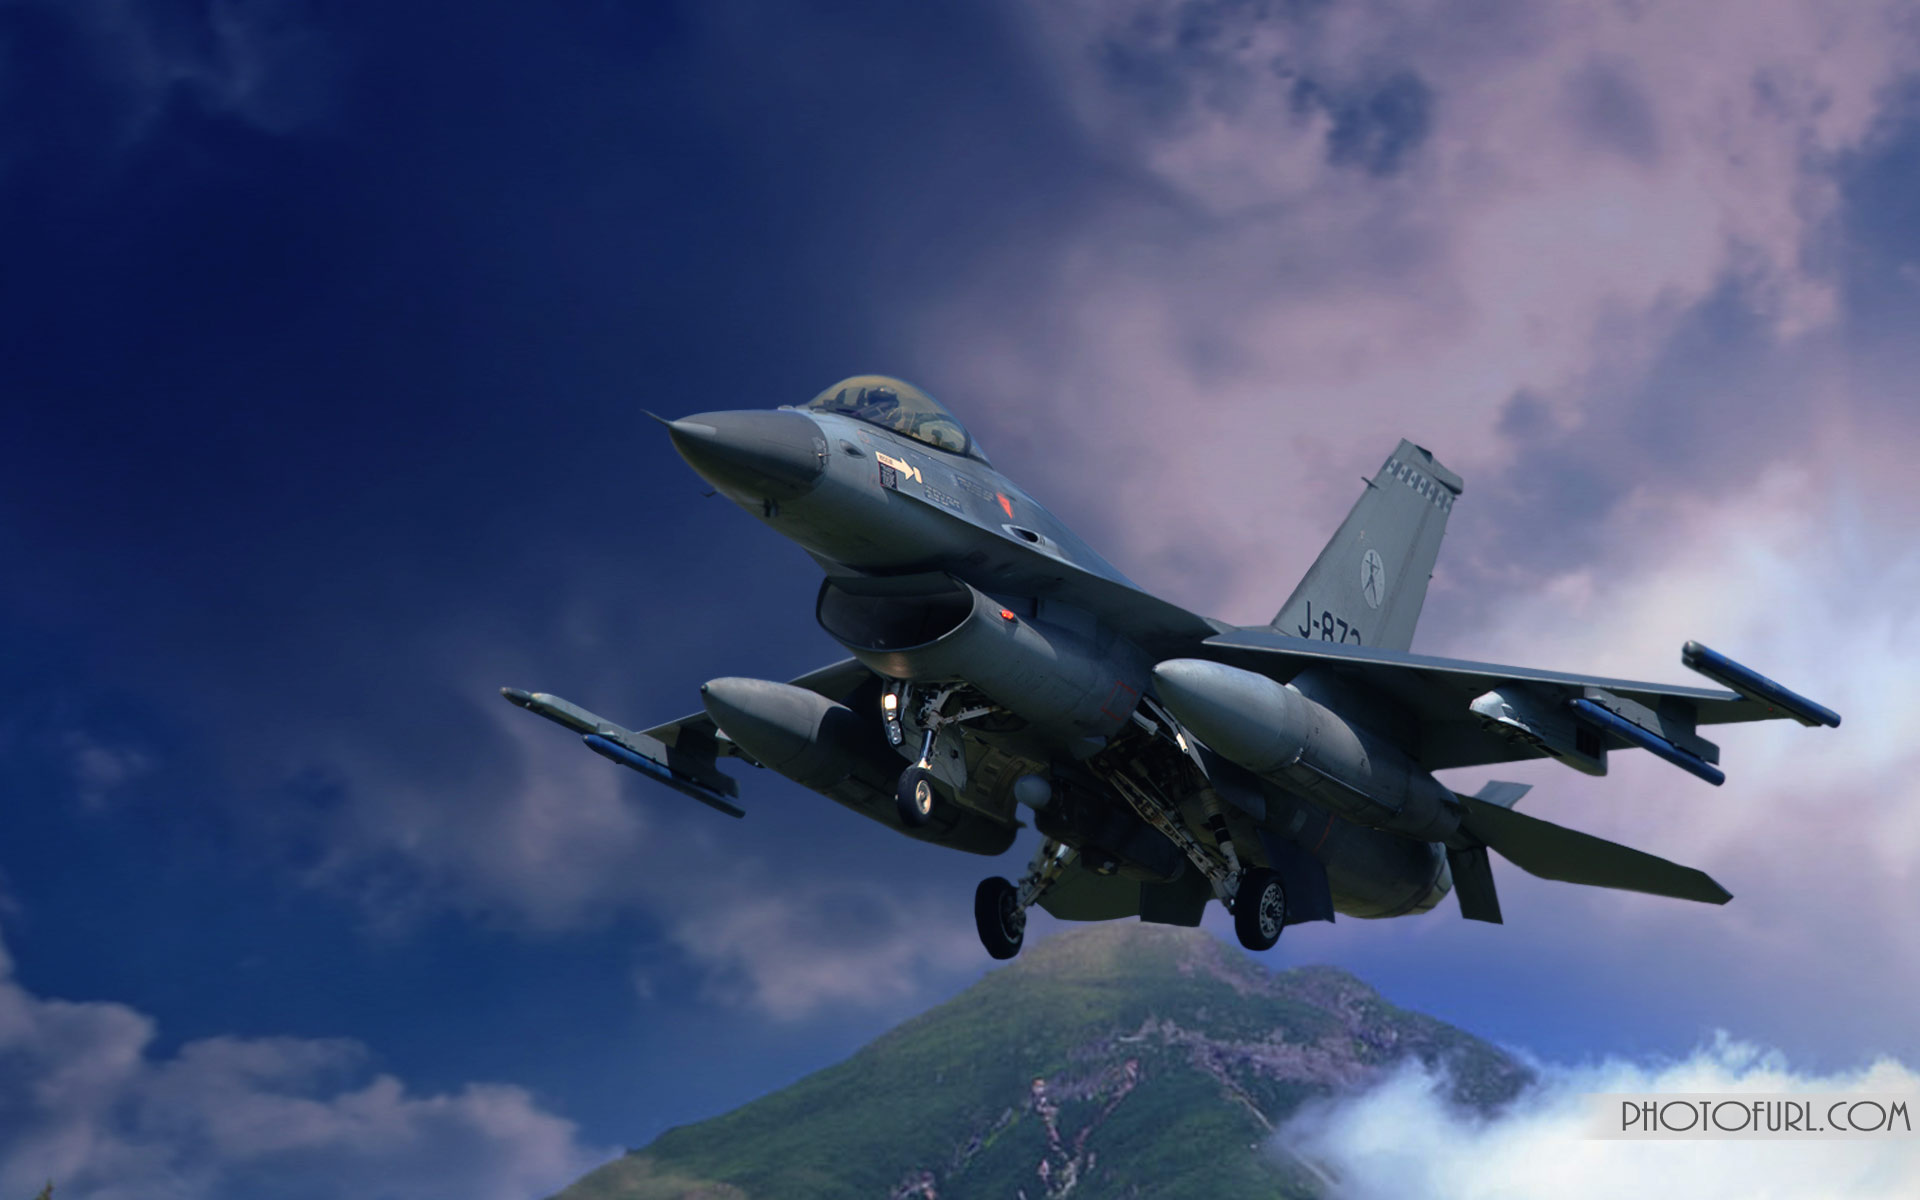 jet wallpaper hd,aircraft,airplane,military aircraft,air force,fighter aircraft